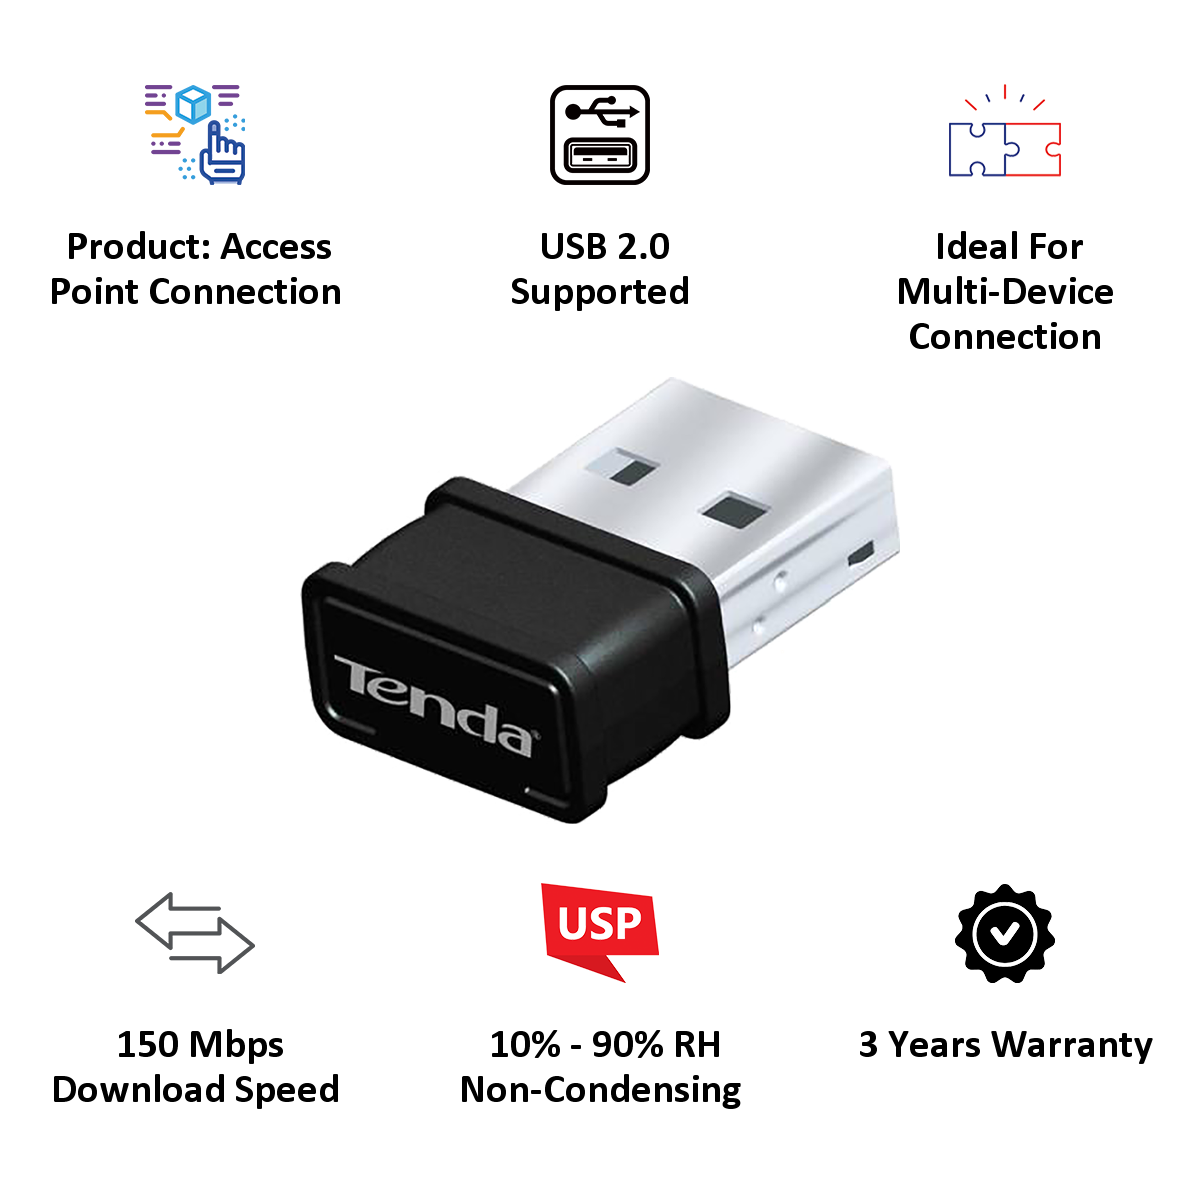 Buy Tp-Link UB400 Network Adapter (Nano-Sized, 152502278, Black) Online -  Croma